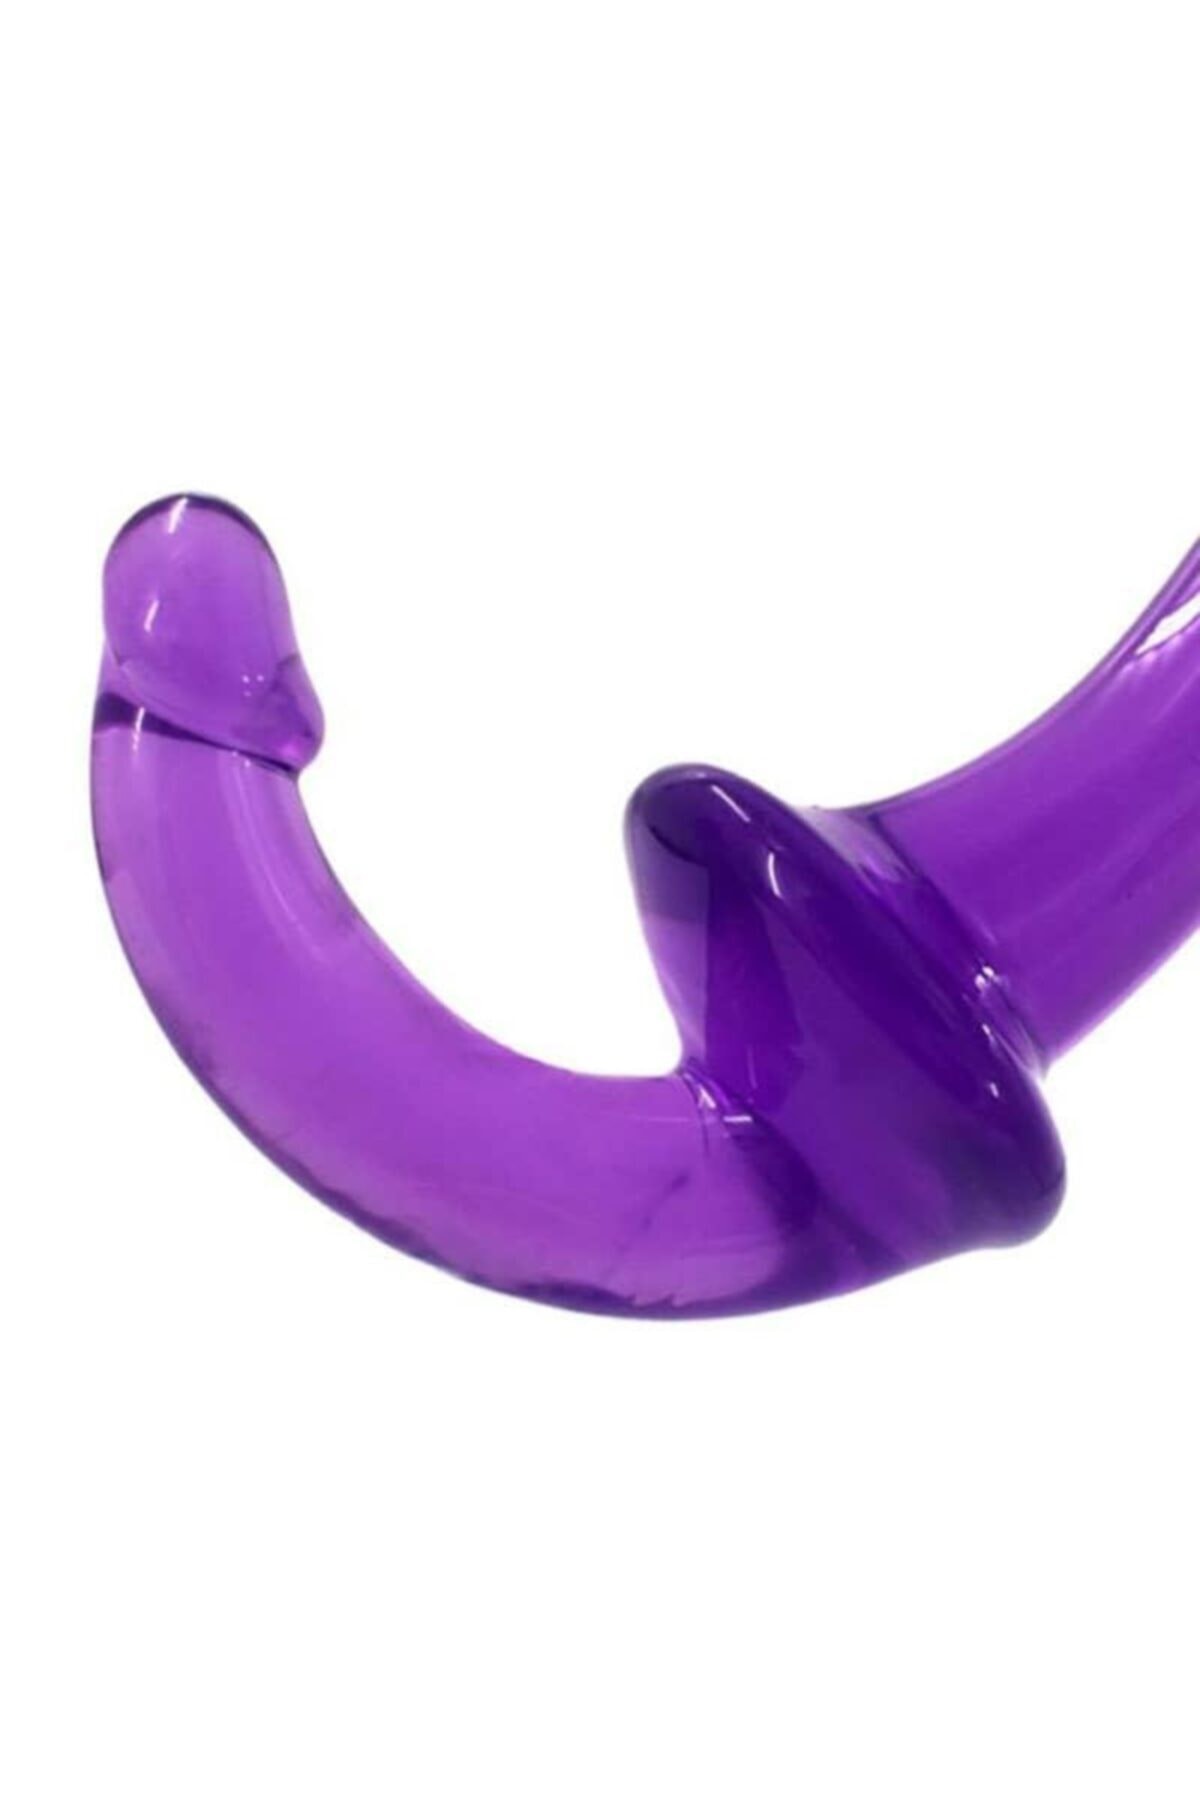 Erox Jelly Strapless Strap-on Purple